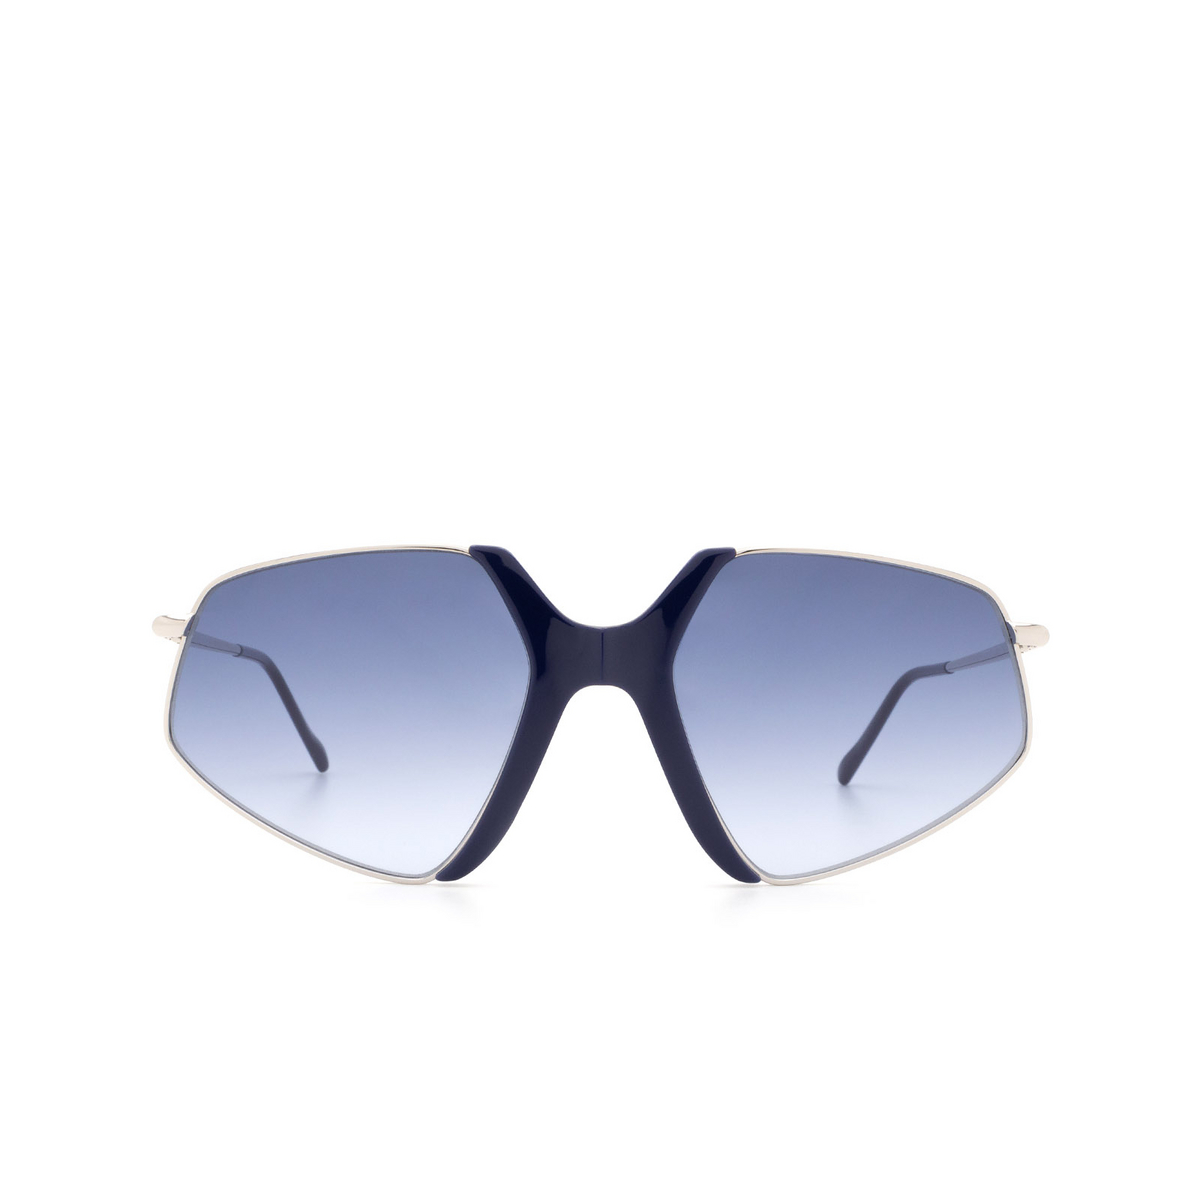 Sportmax® Irregular Sunglasses: SM0029 color Blue 90W - front view.